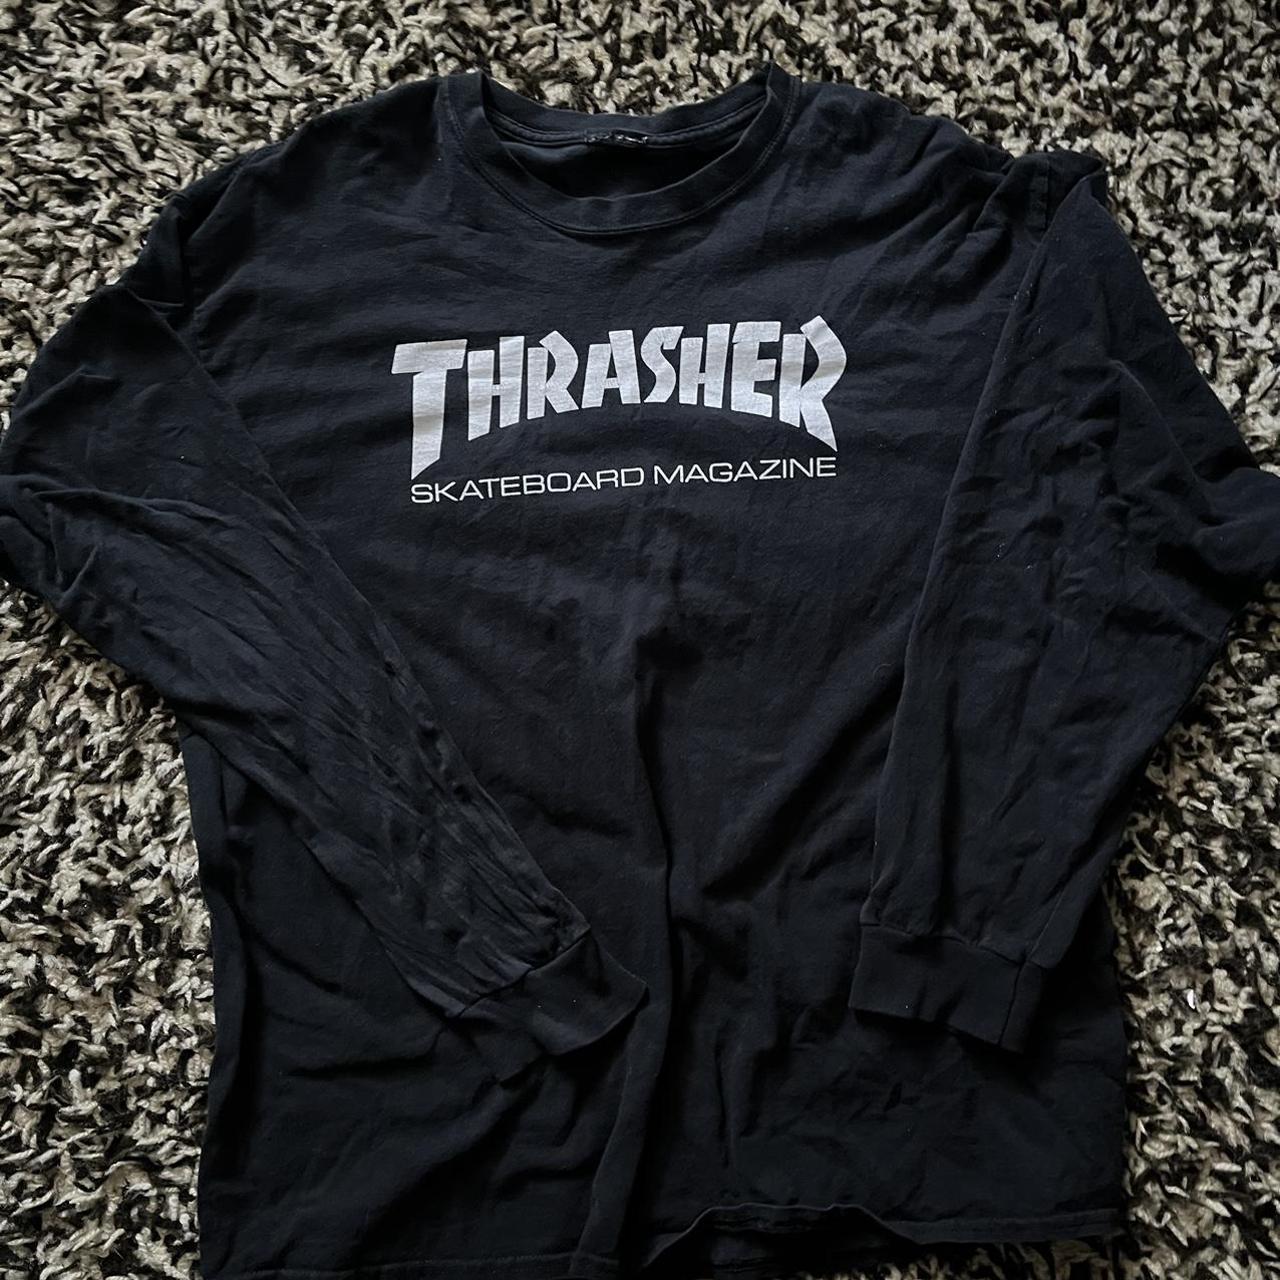 Thrasher Men's Black and White Shirt